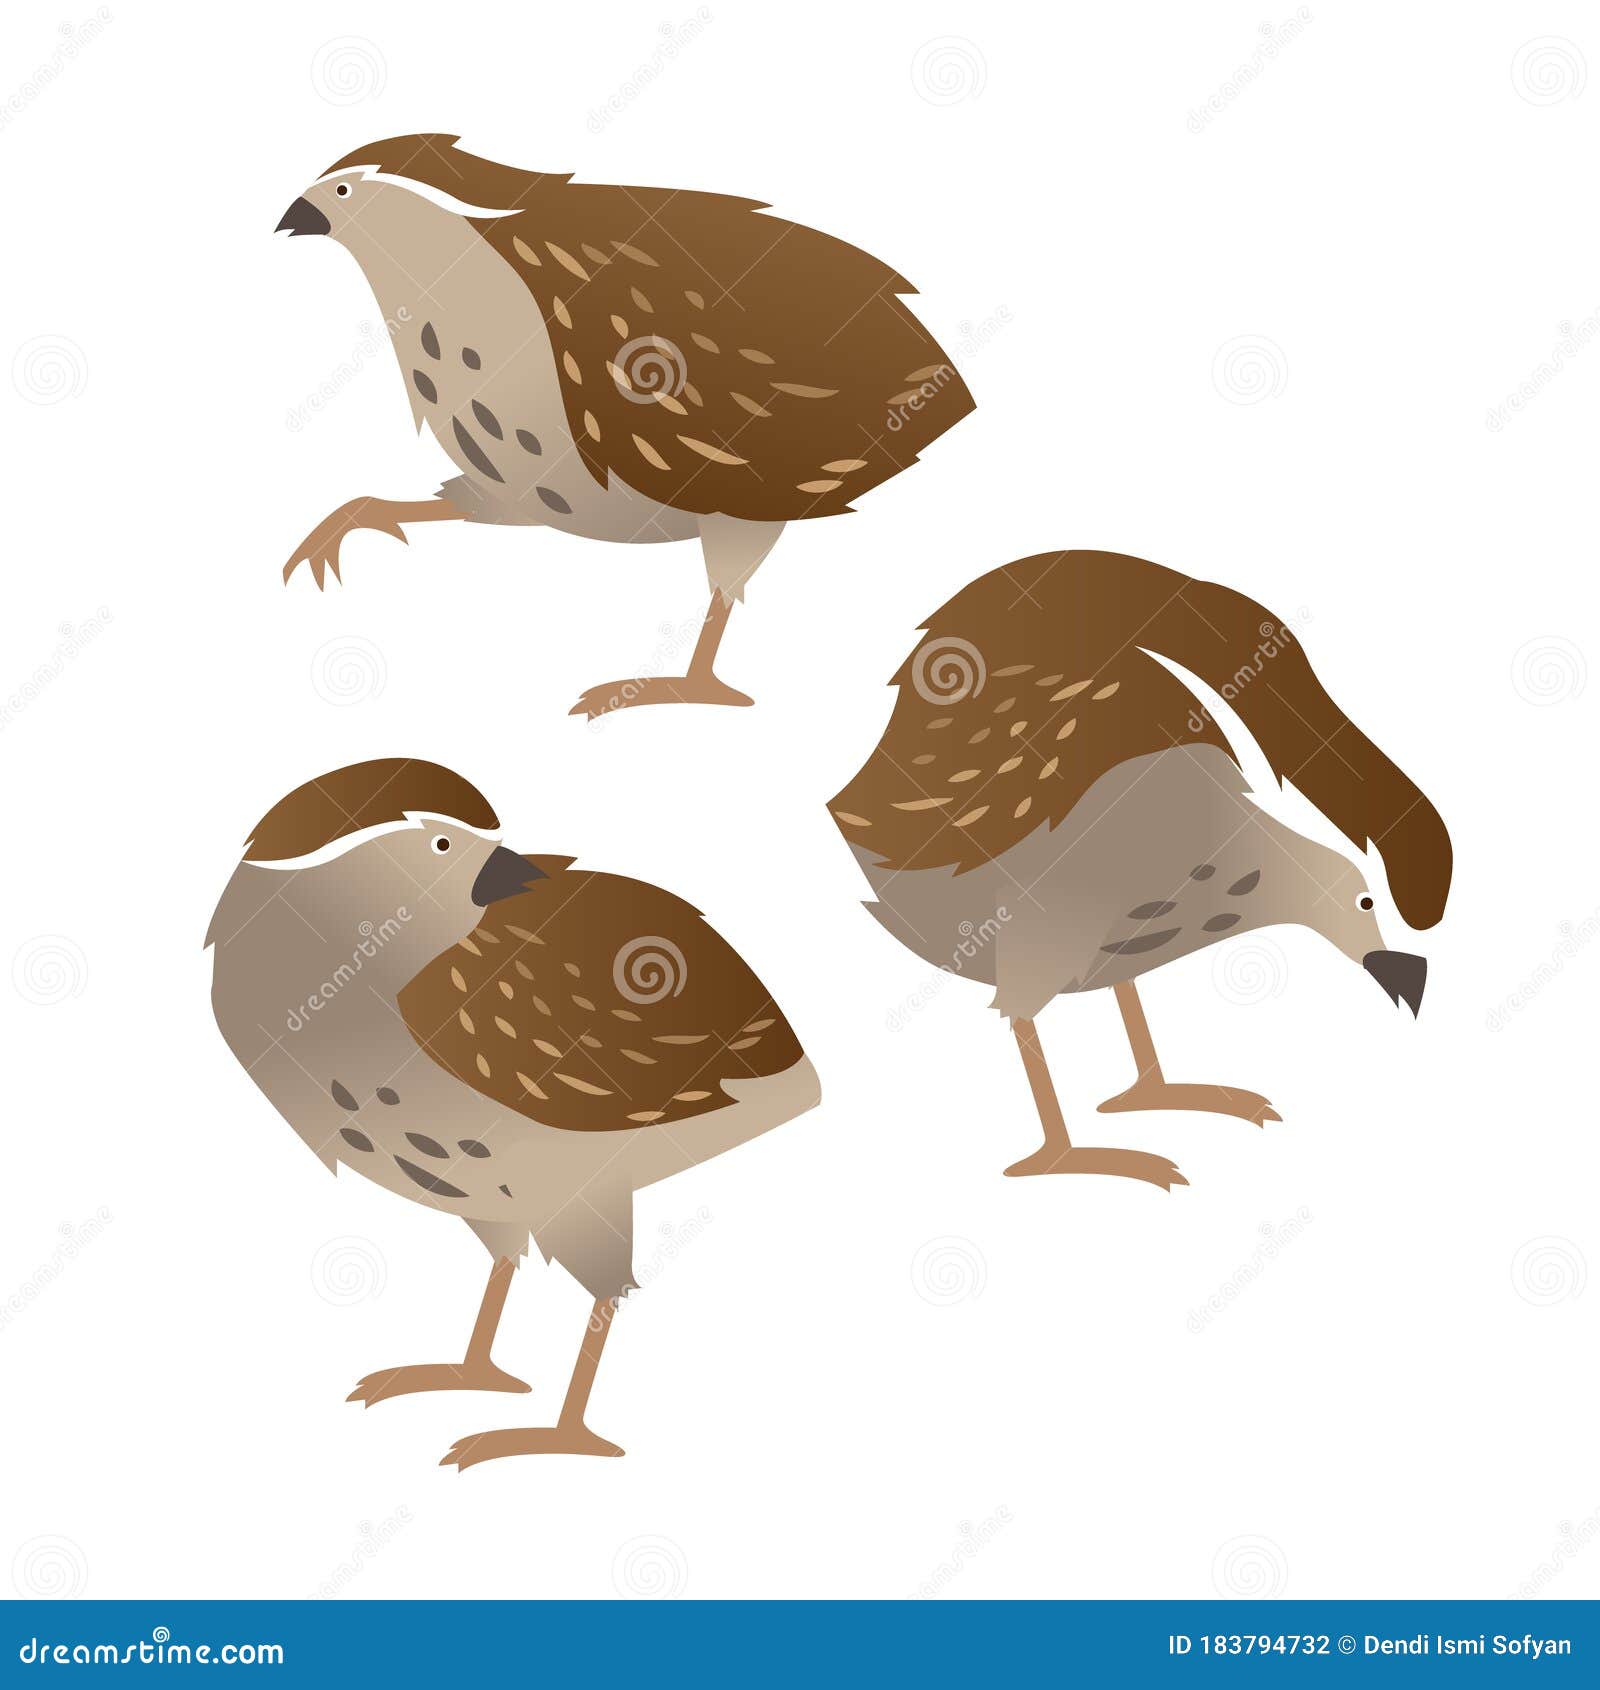 Cute little quail cartoon stock vector. Illustration of design - 183794732